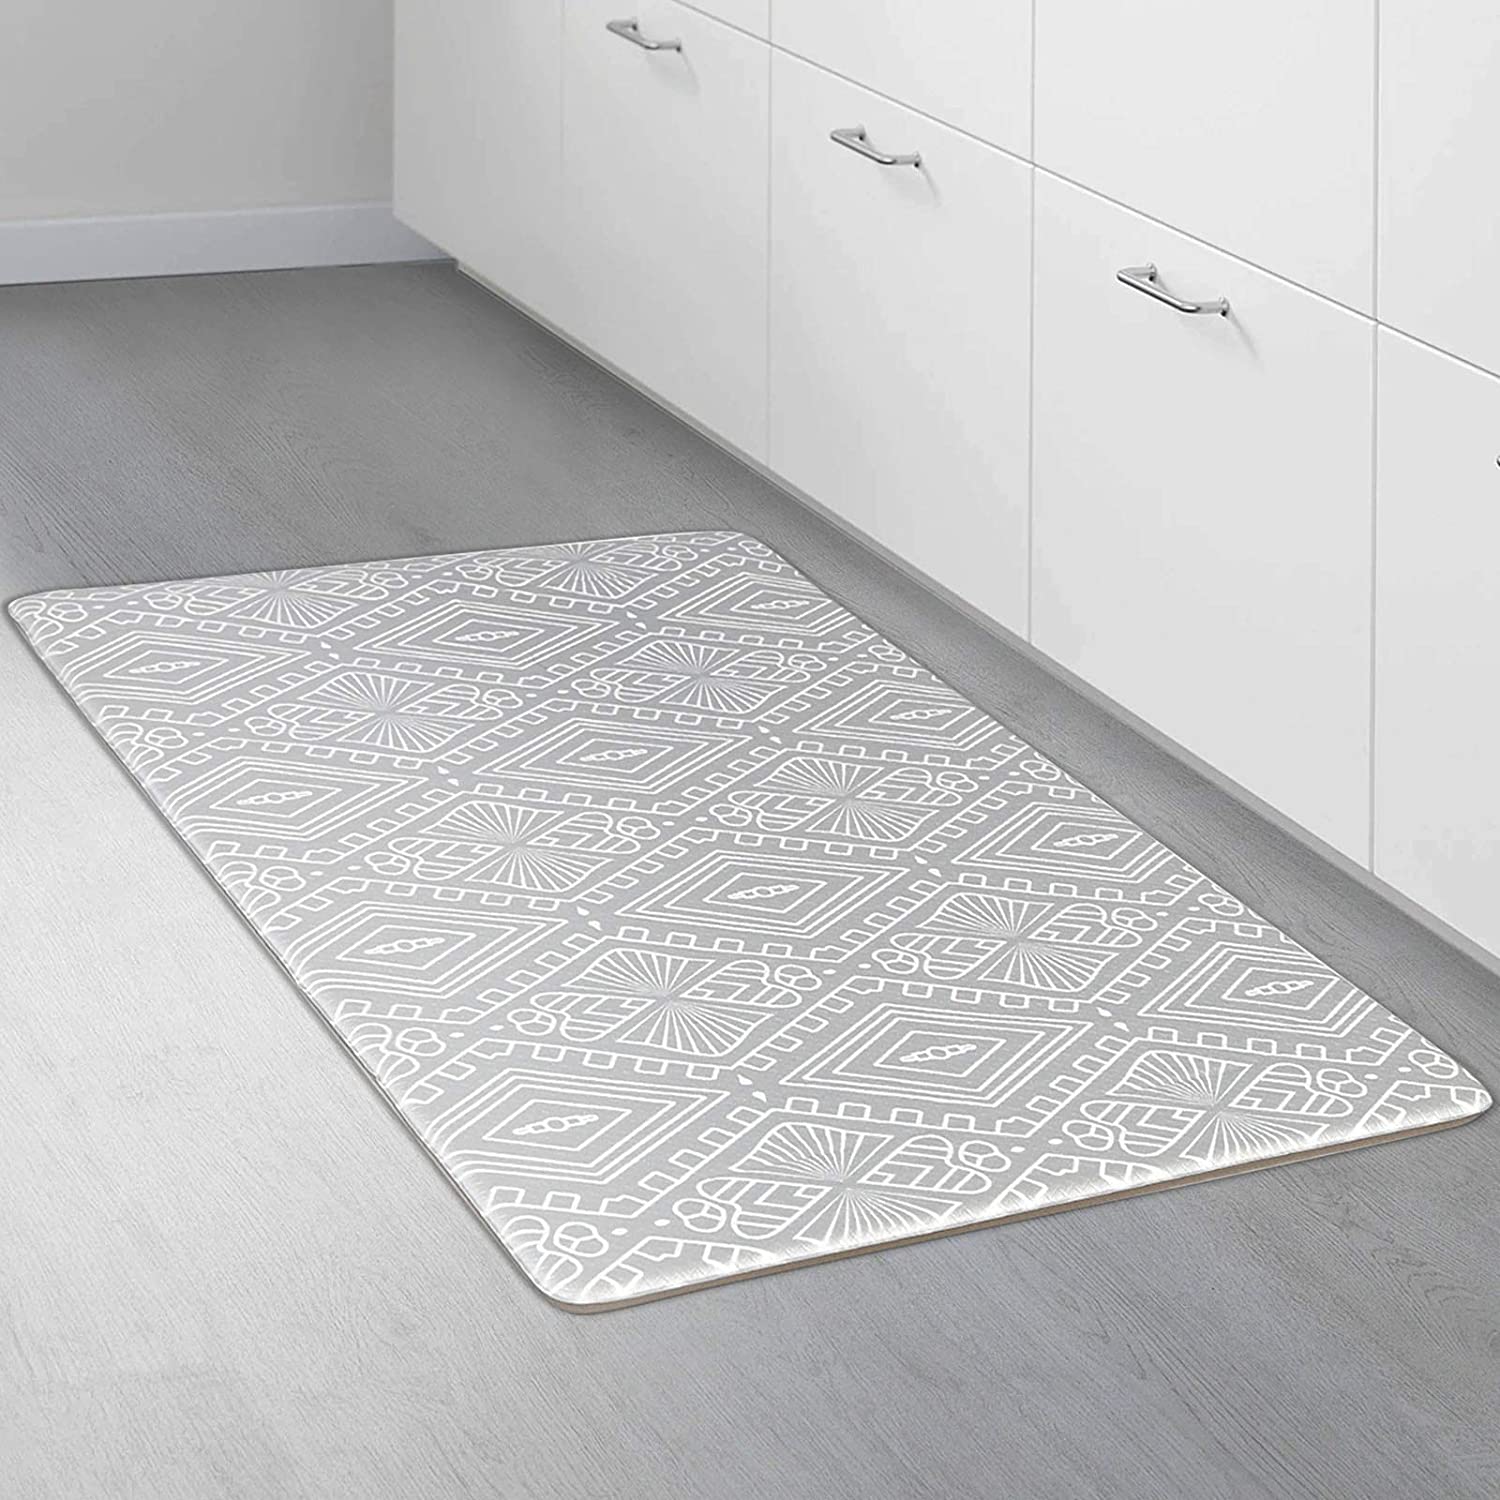 A rectangular kitchen mat with a geometric pattern on a wooden floor.